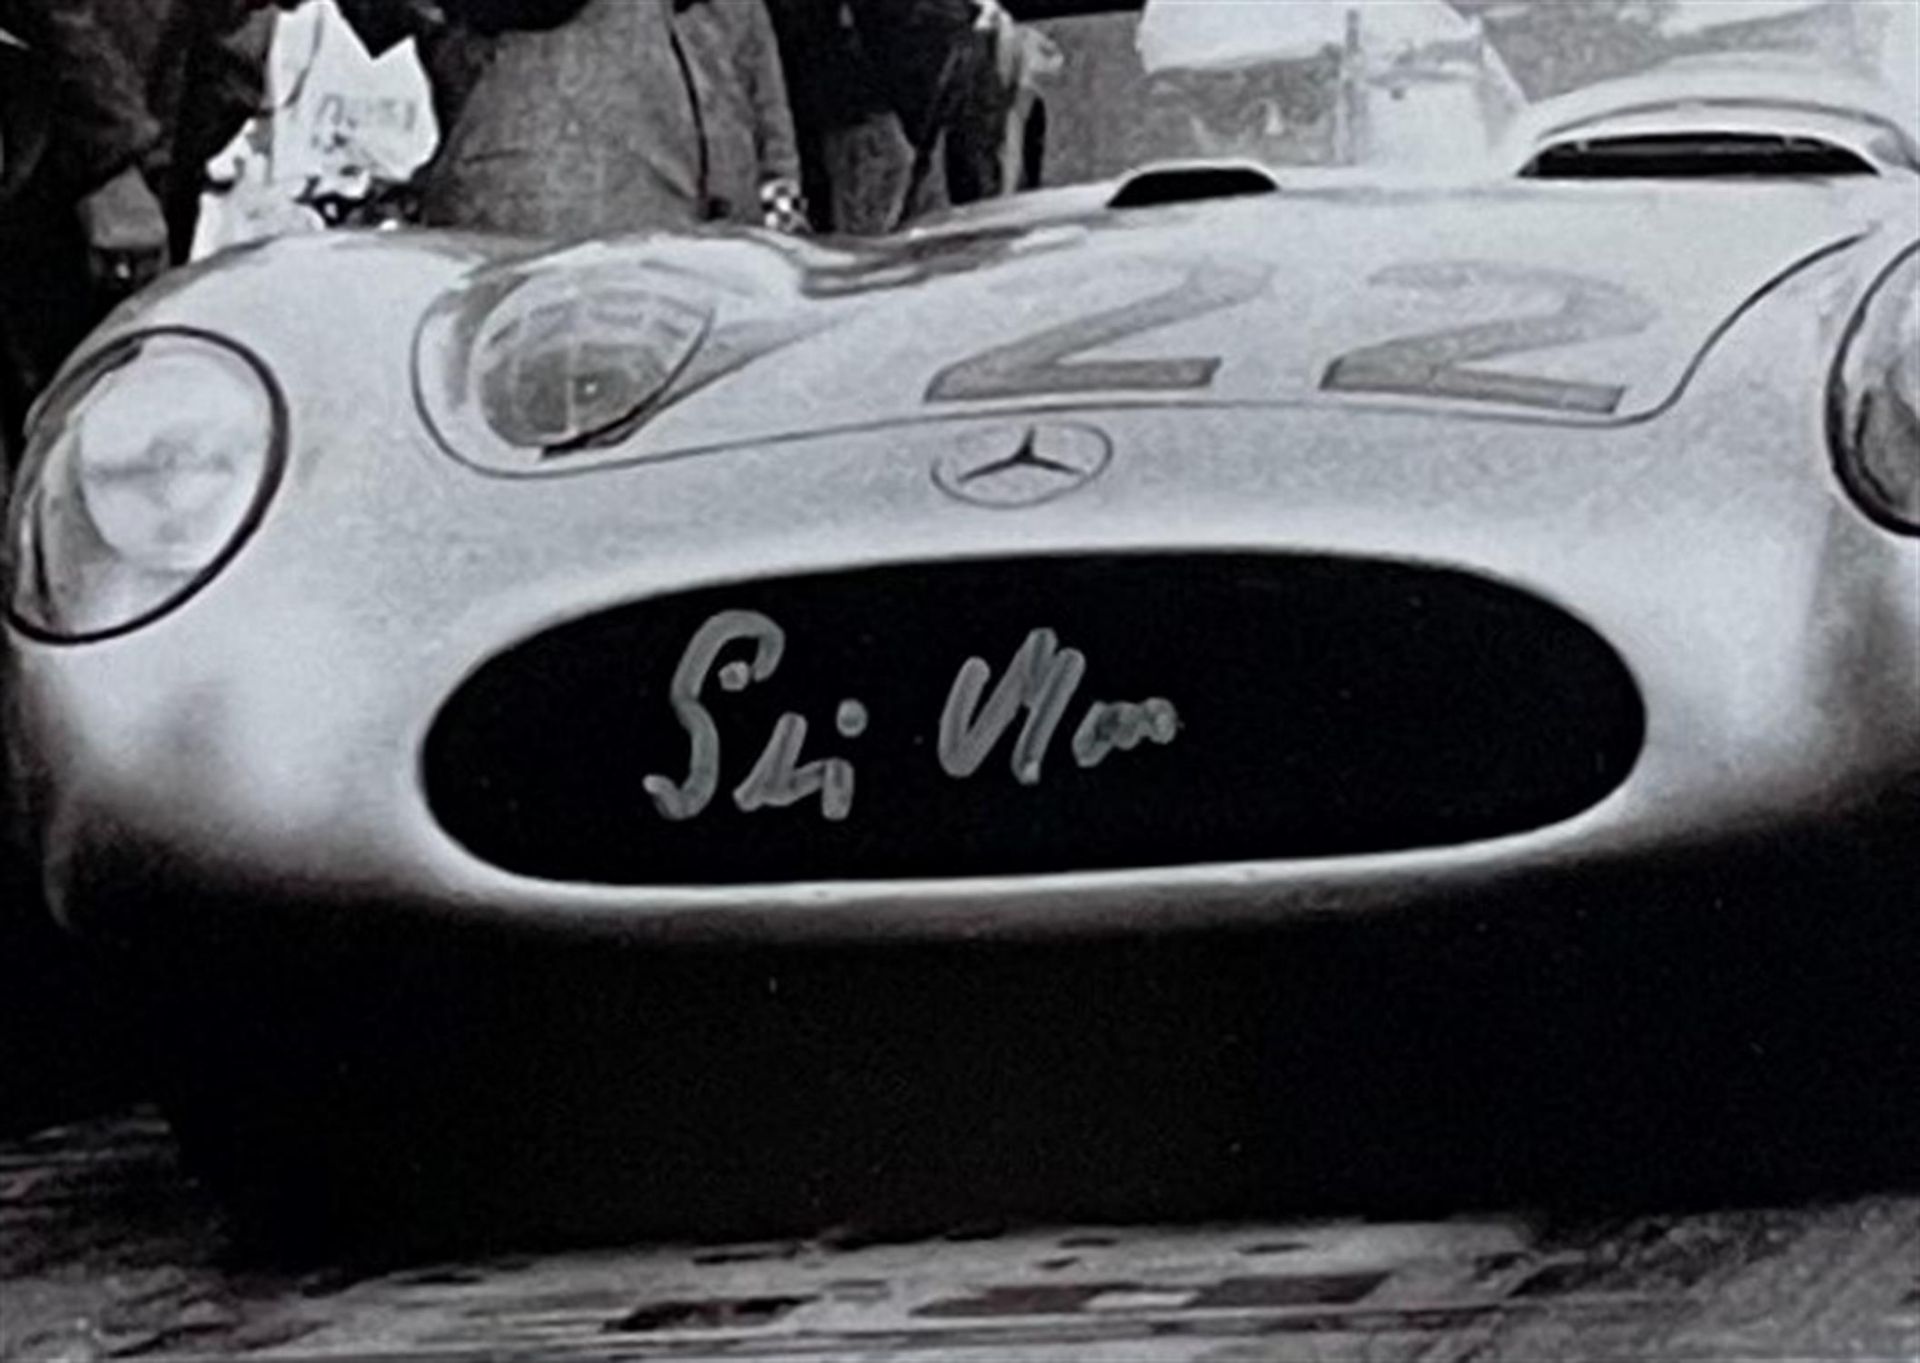 Stirling Moss Signed 1955 Mille Miglia Framed Photo - Image 3 of 4